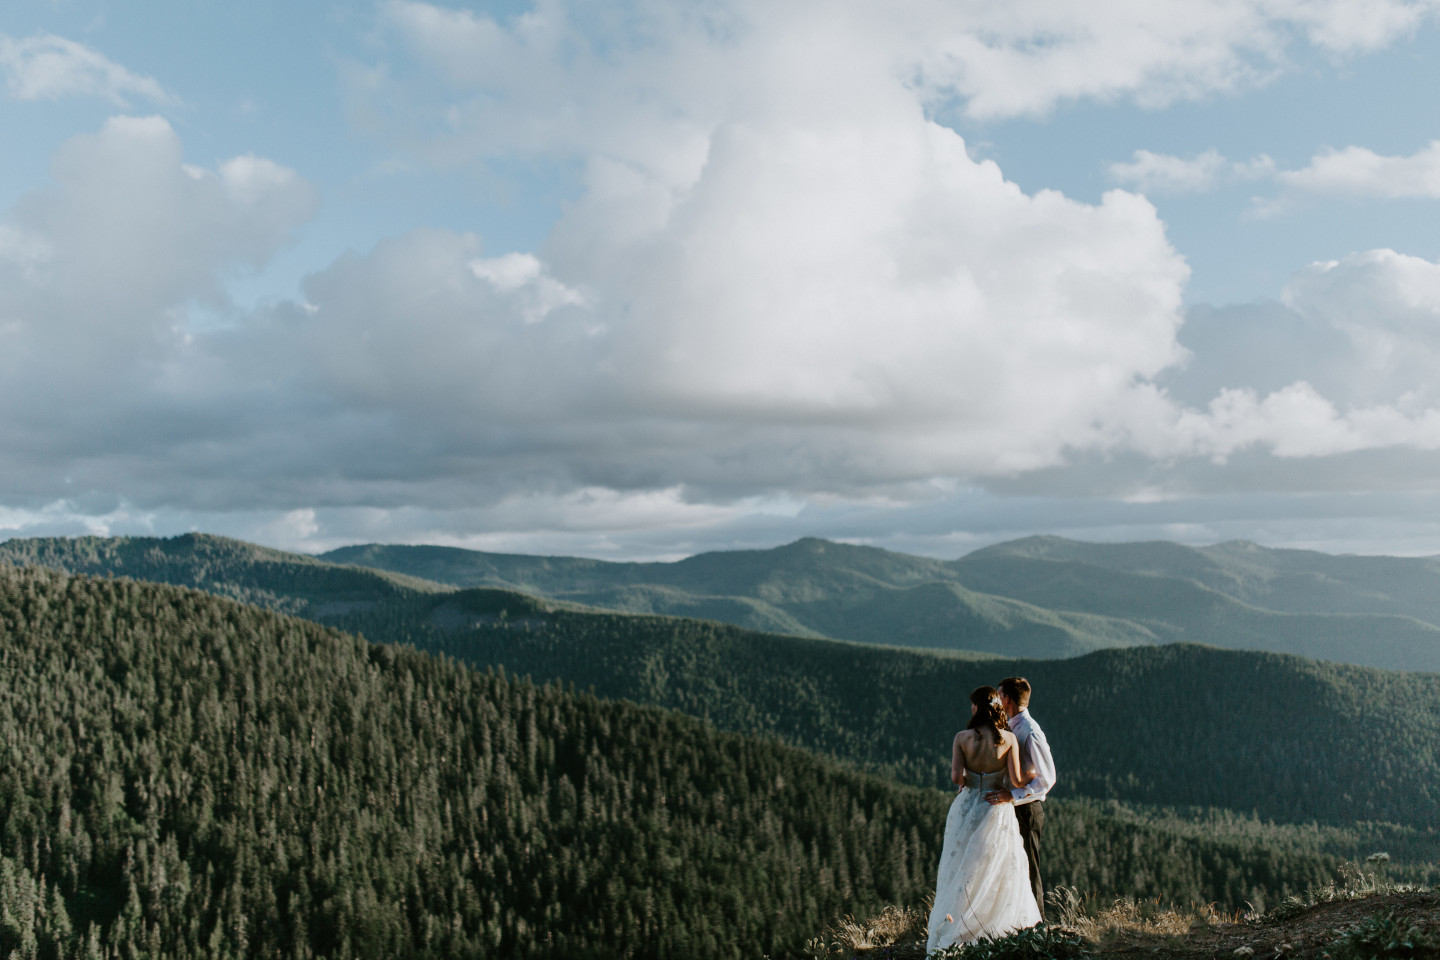 Ryan and Moira enjoy the view at Mount Hood. Adventure elopement wedding shoot by Sienna Plus Josh.